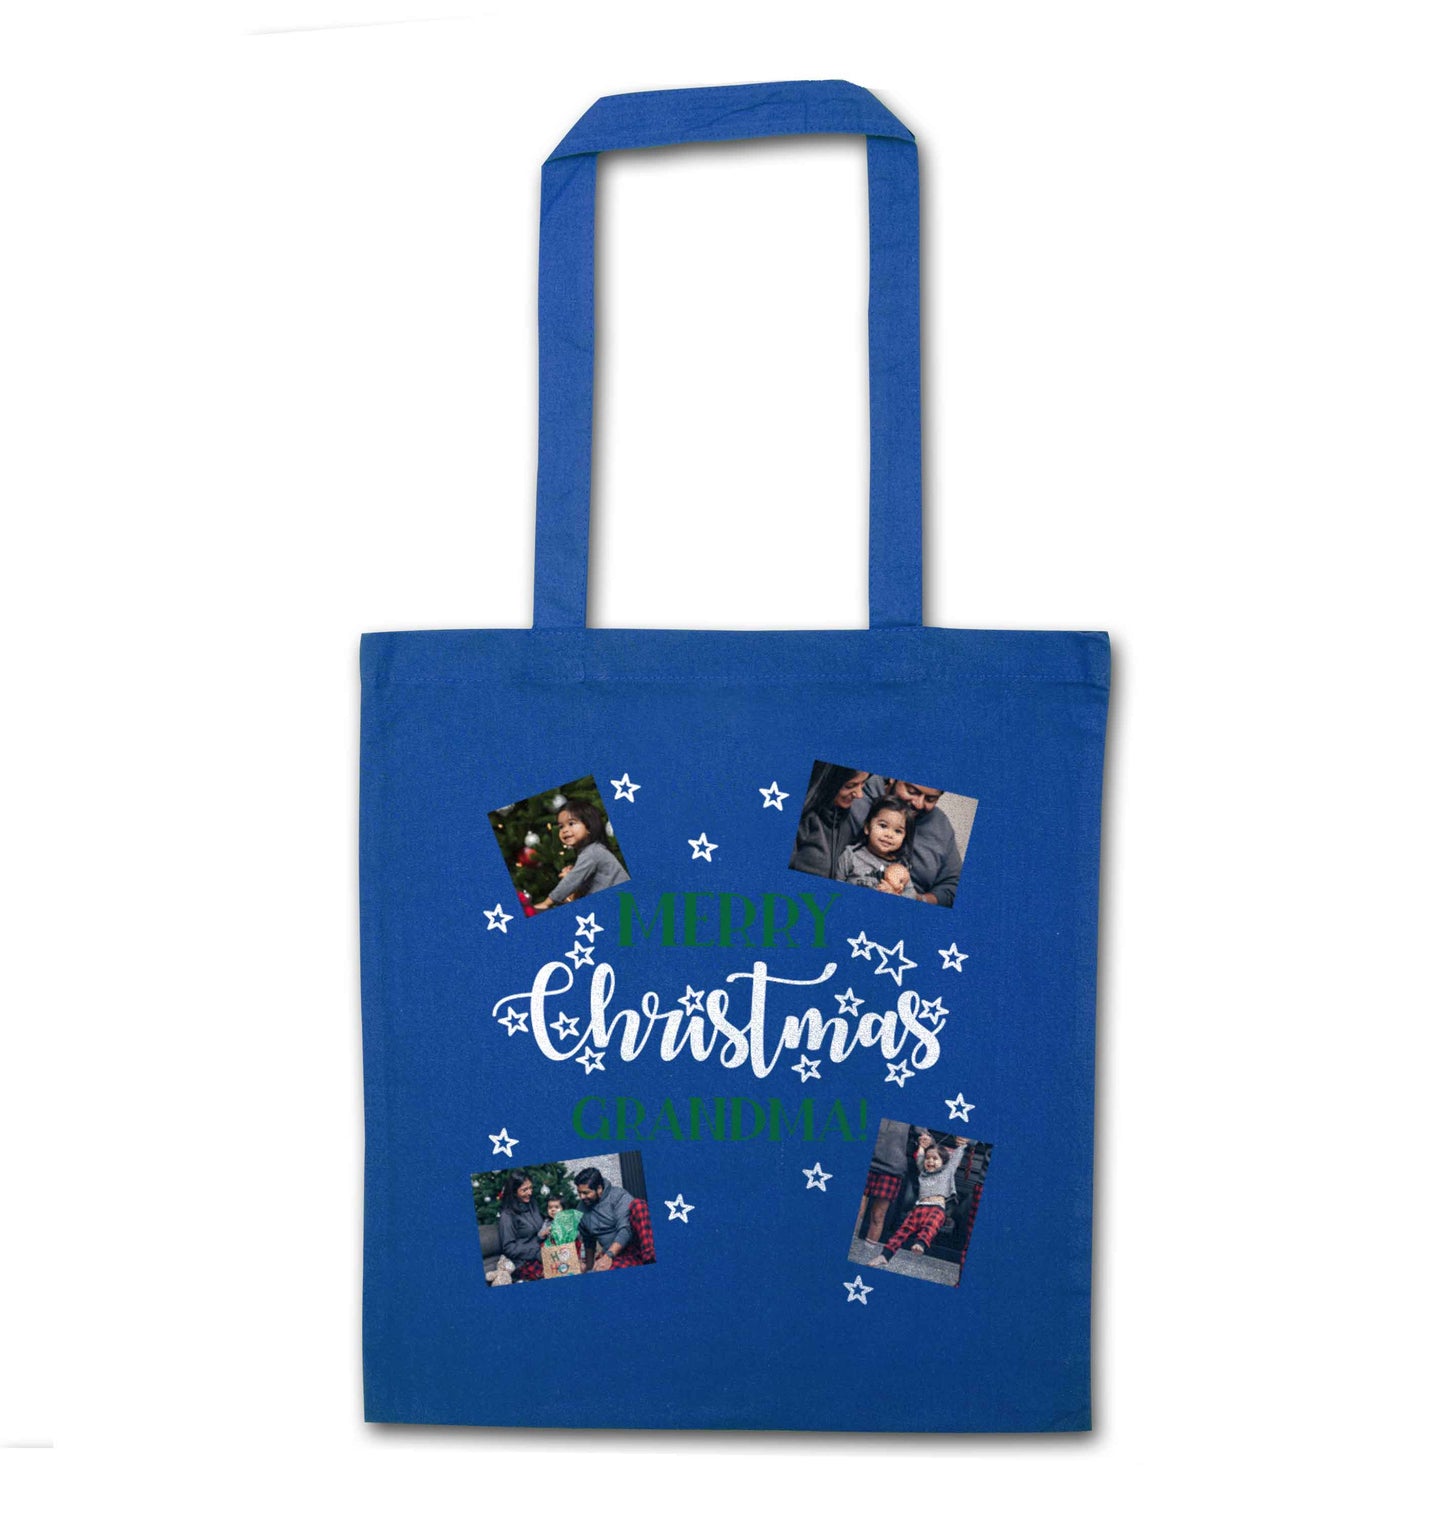 Merry Christmas grandma blue tote bag